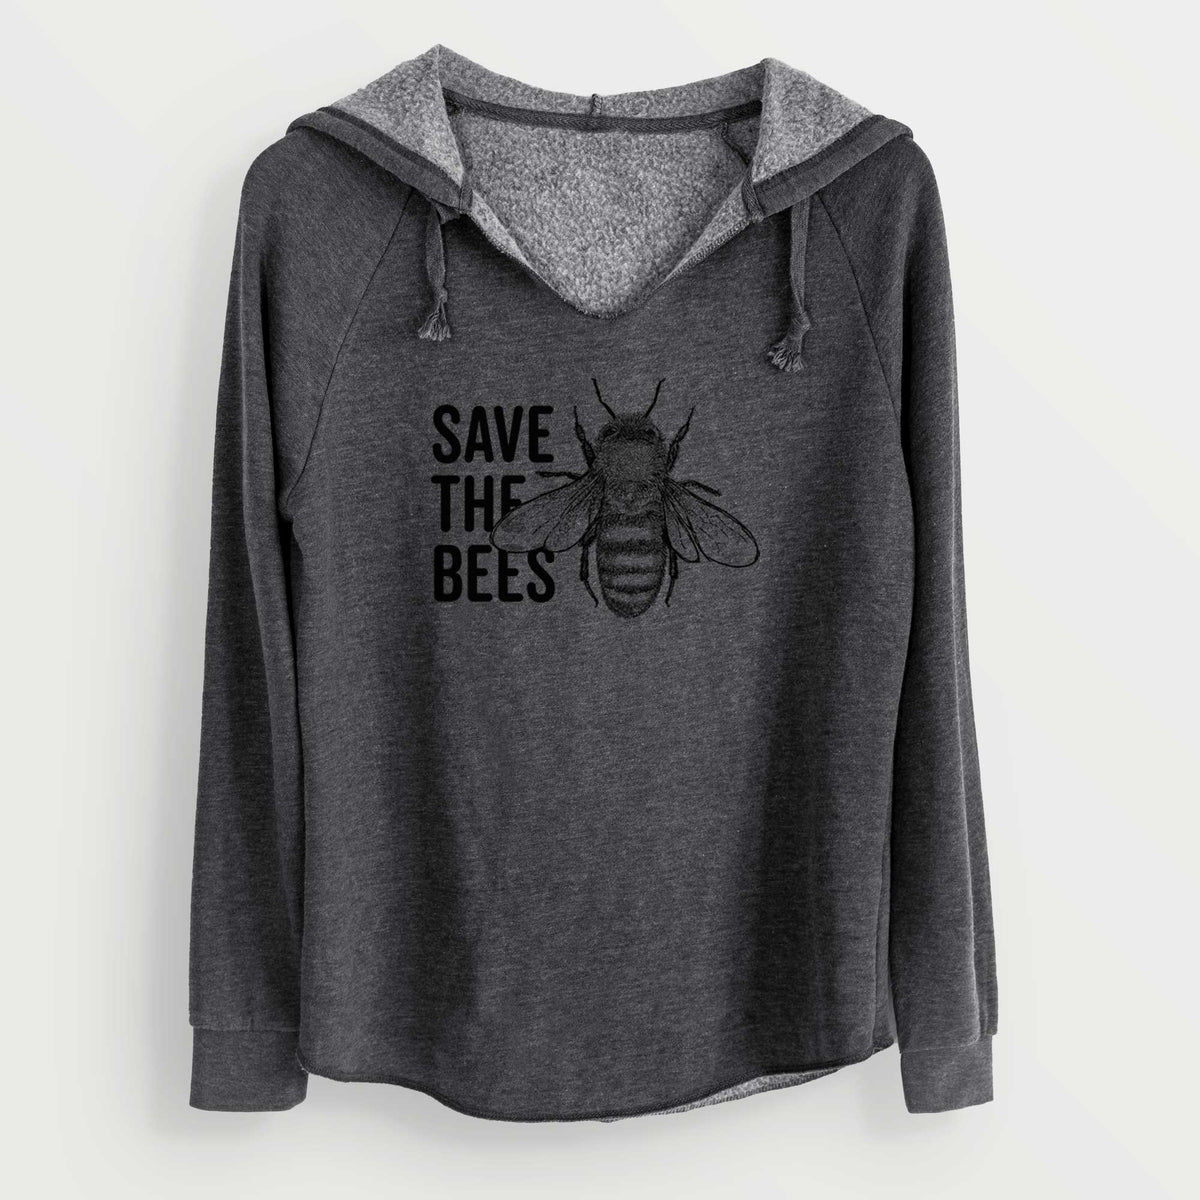 Save the Bees - Cali Wave Hooded Sweatshirt